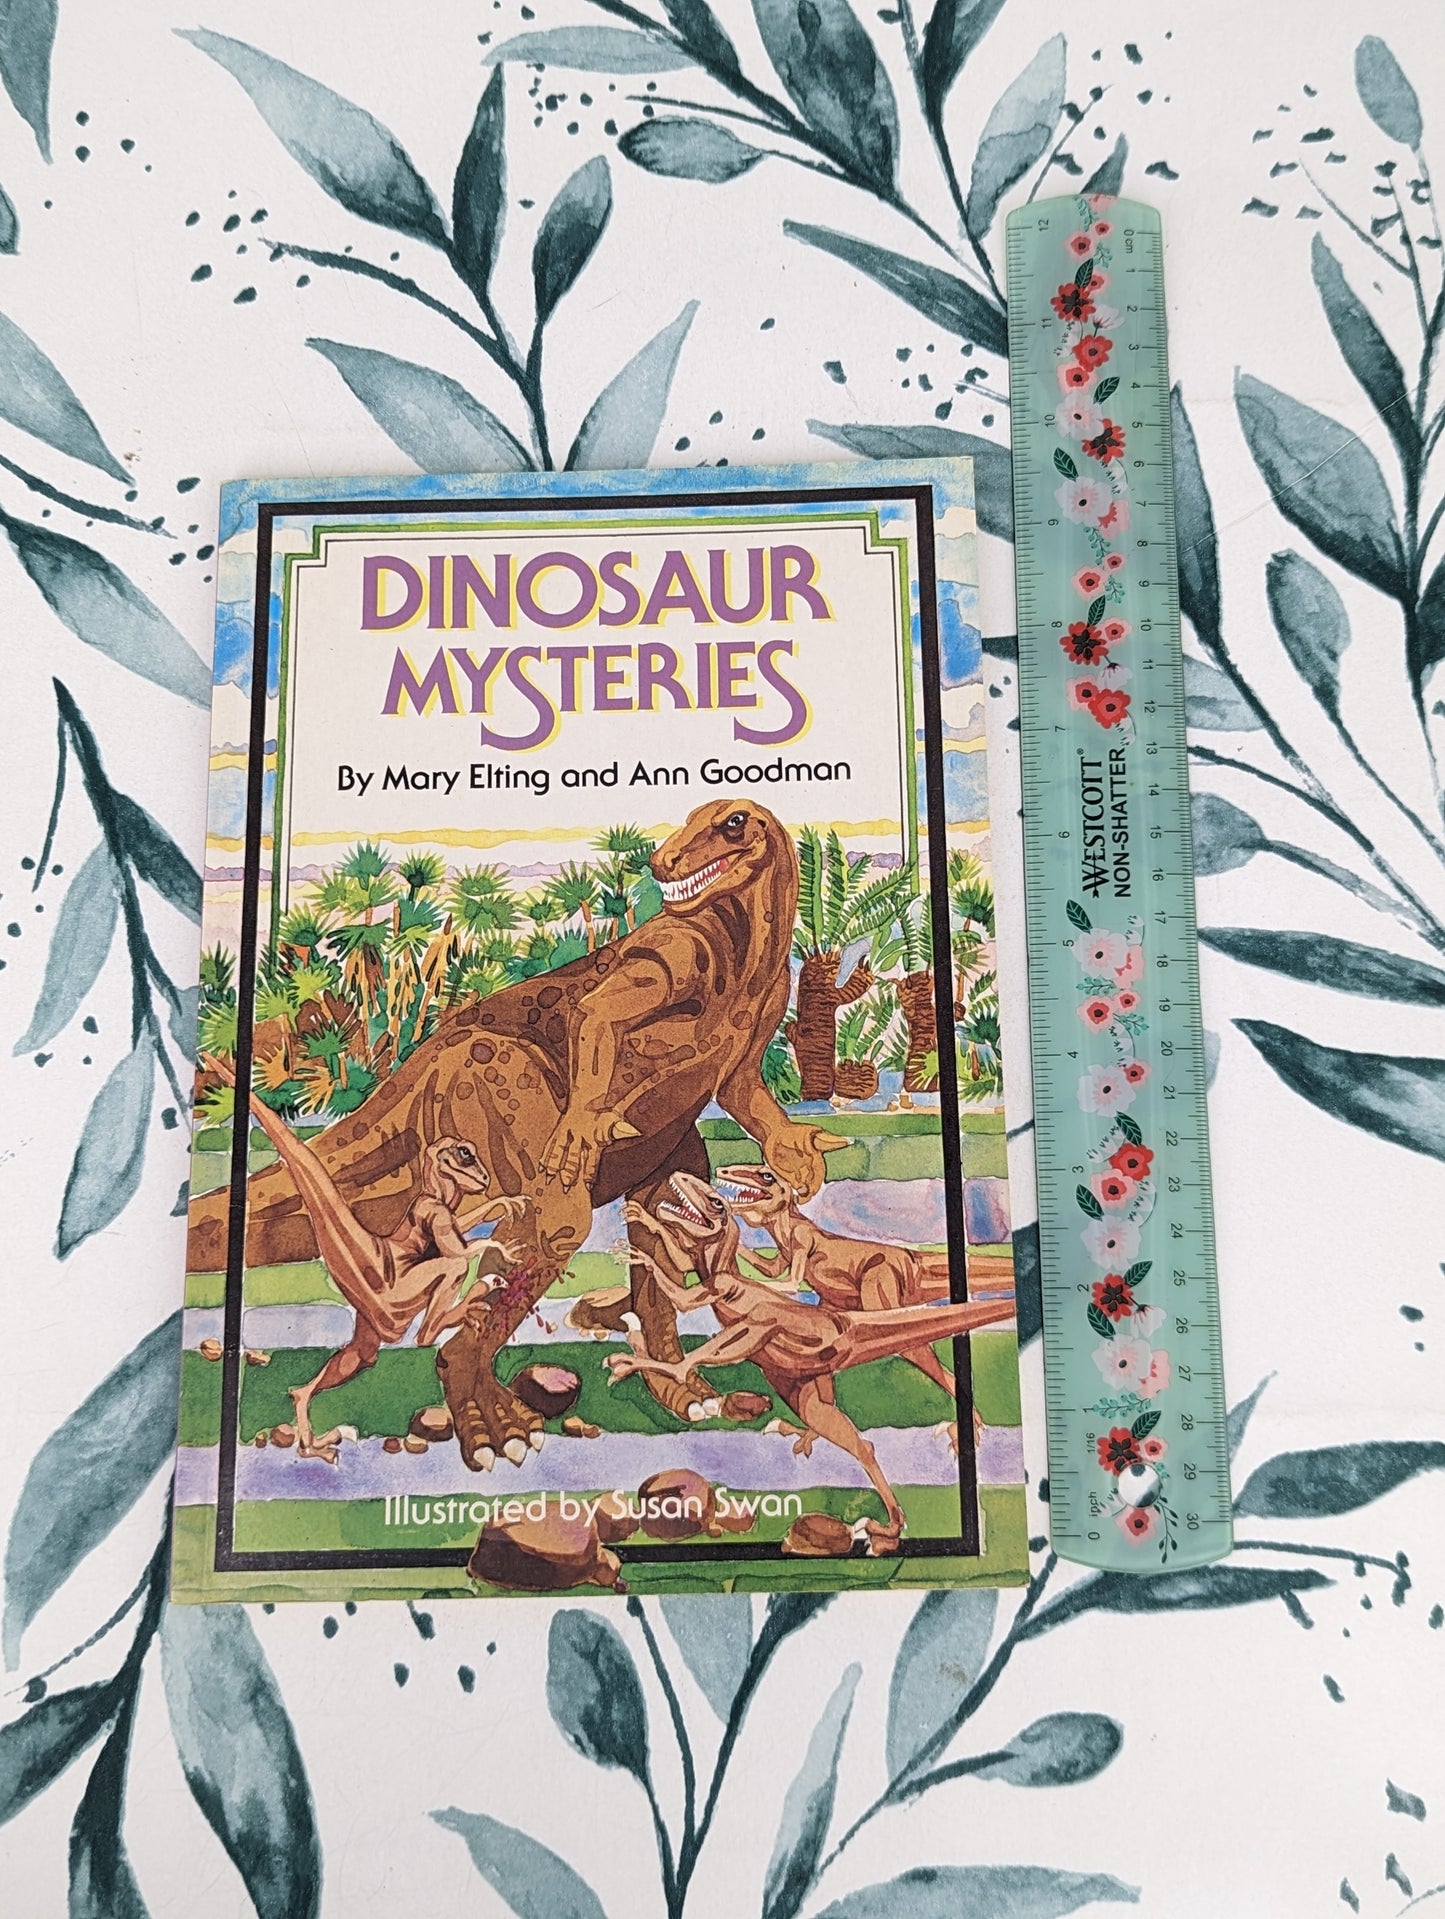 Dinosaur Mysteries